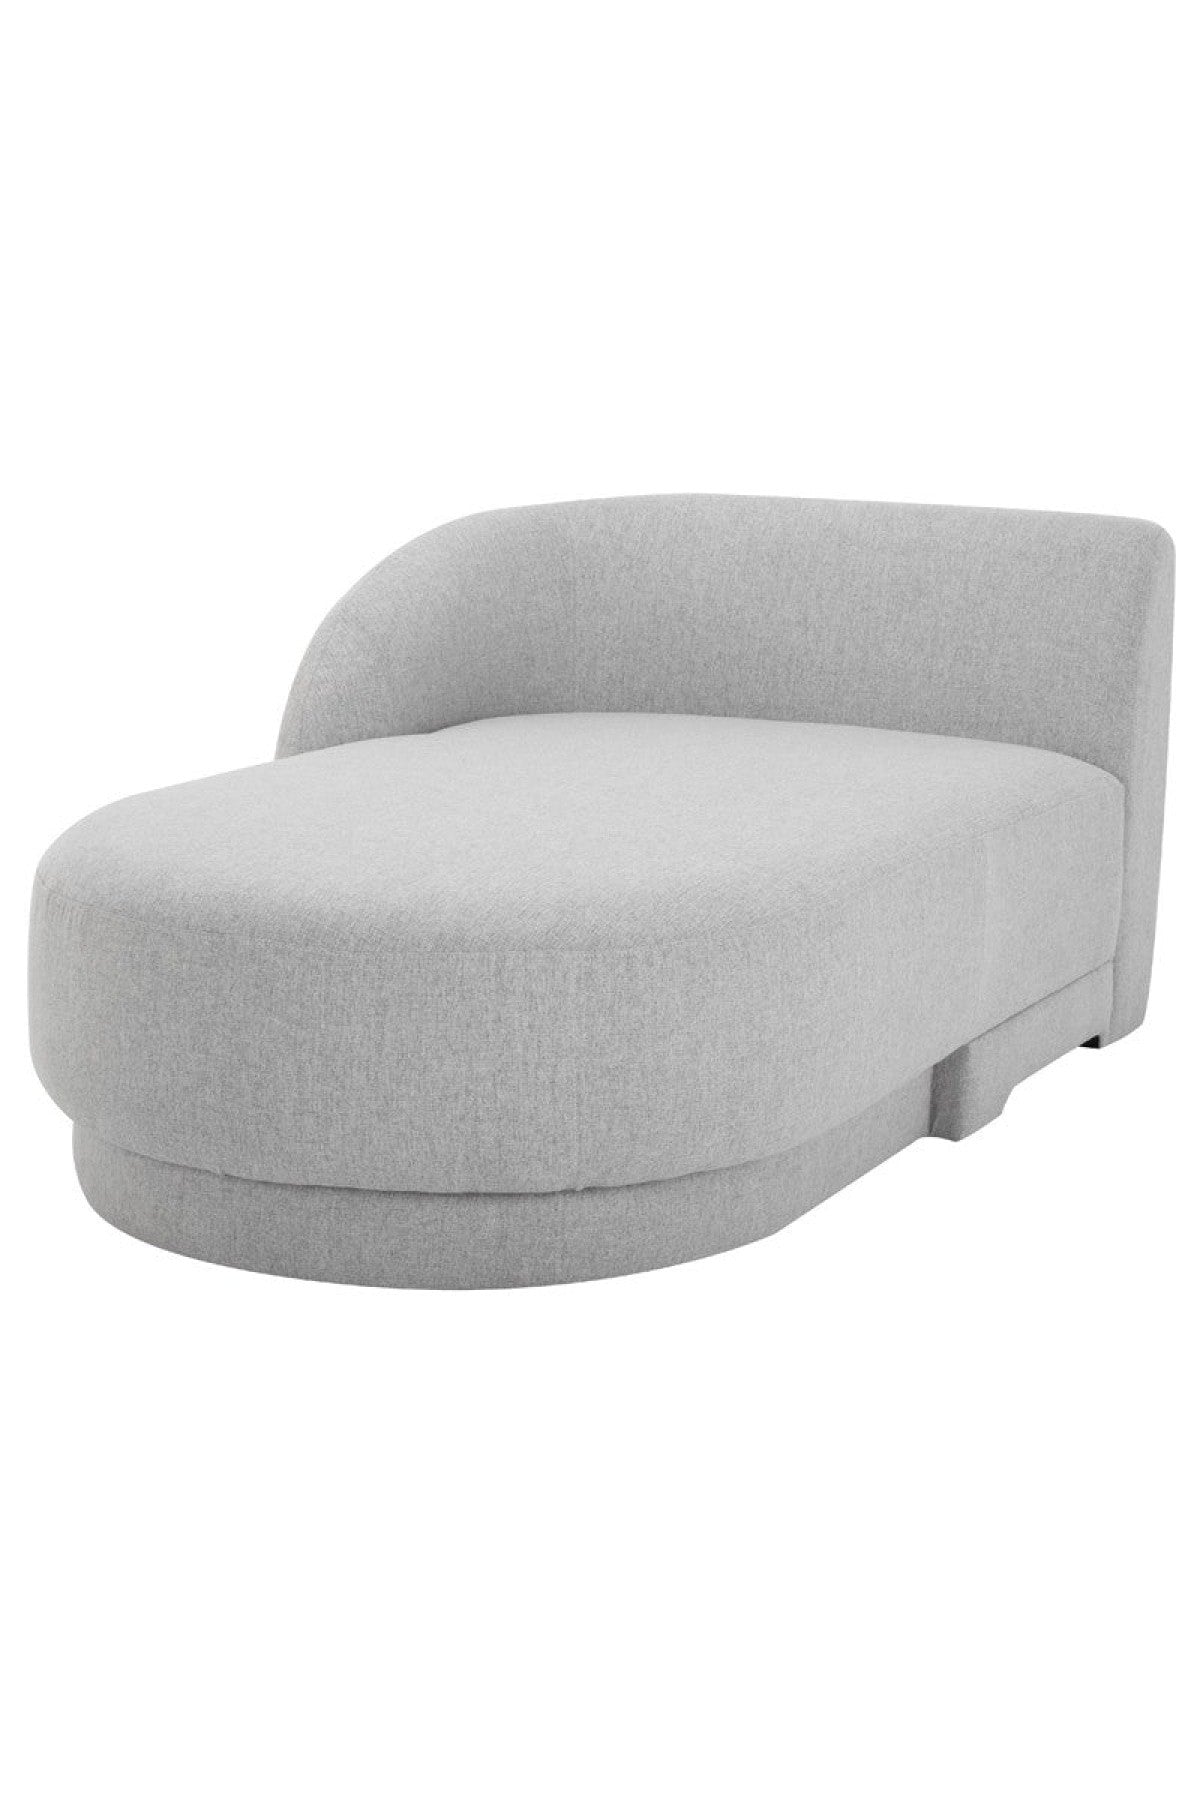 Seraphina Modular Sofa - Linen Grey